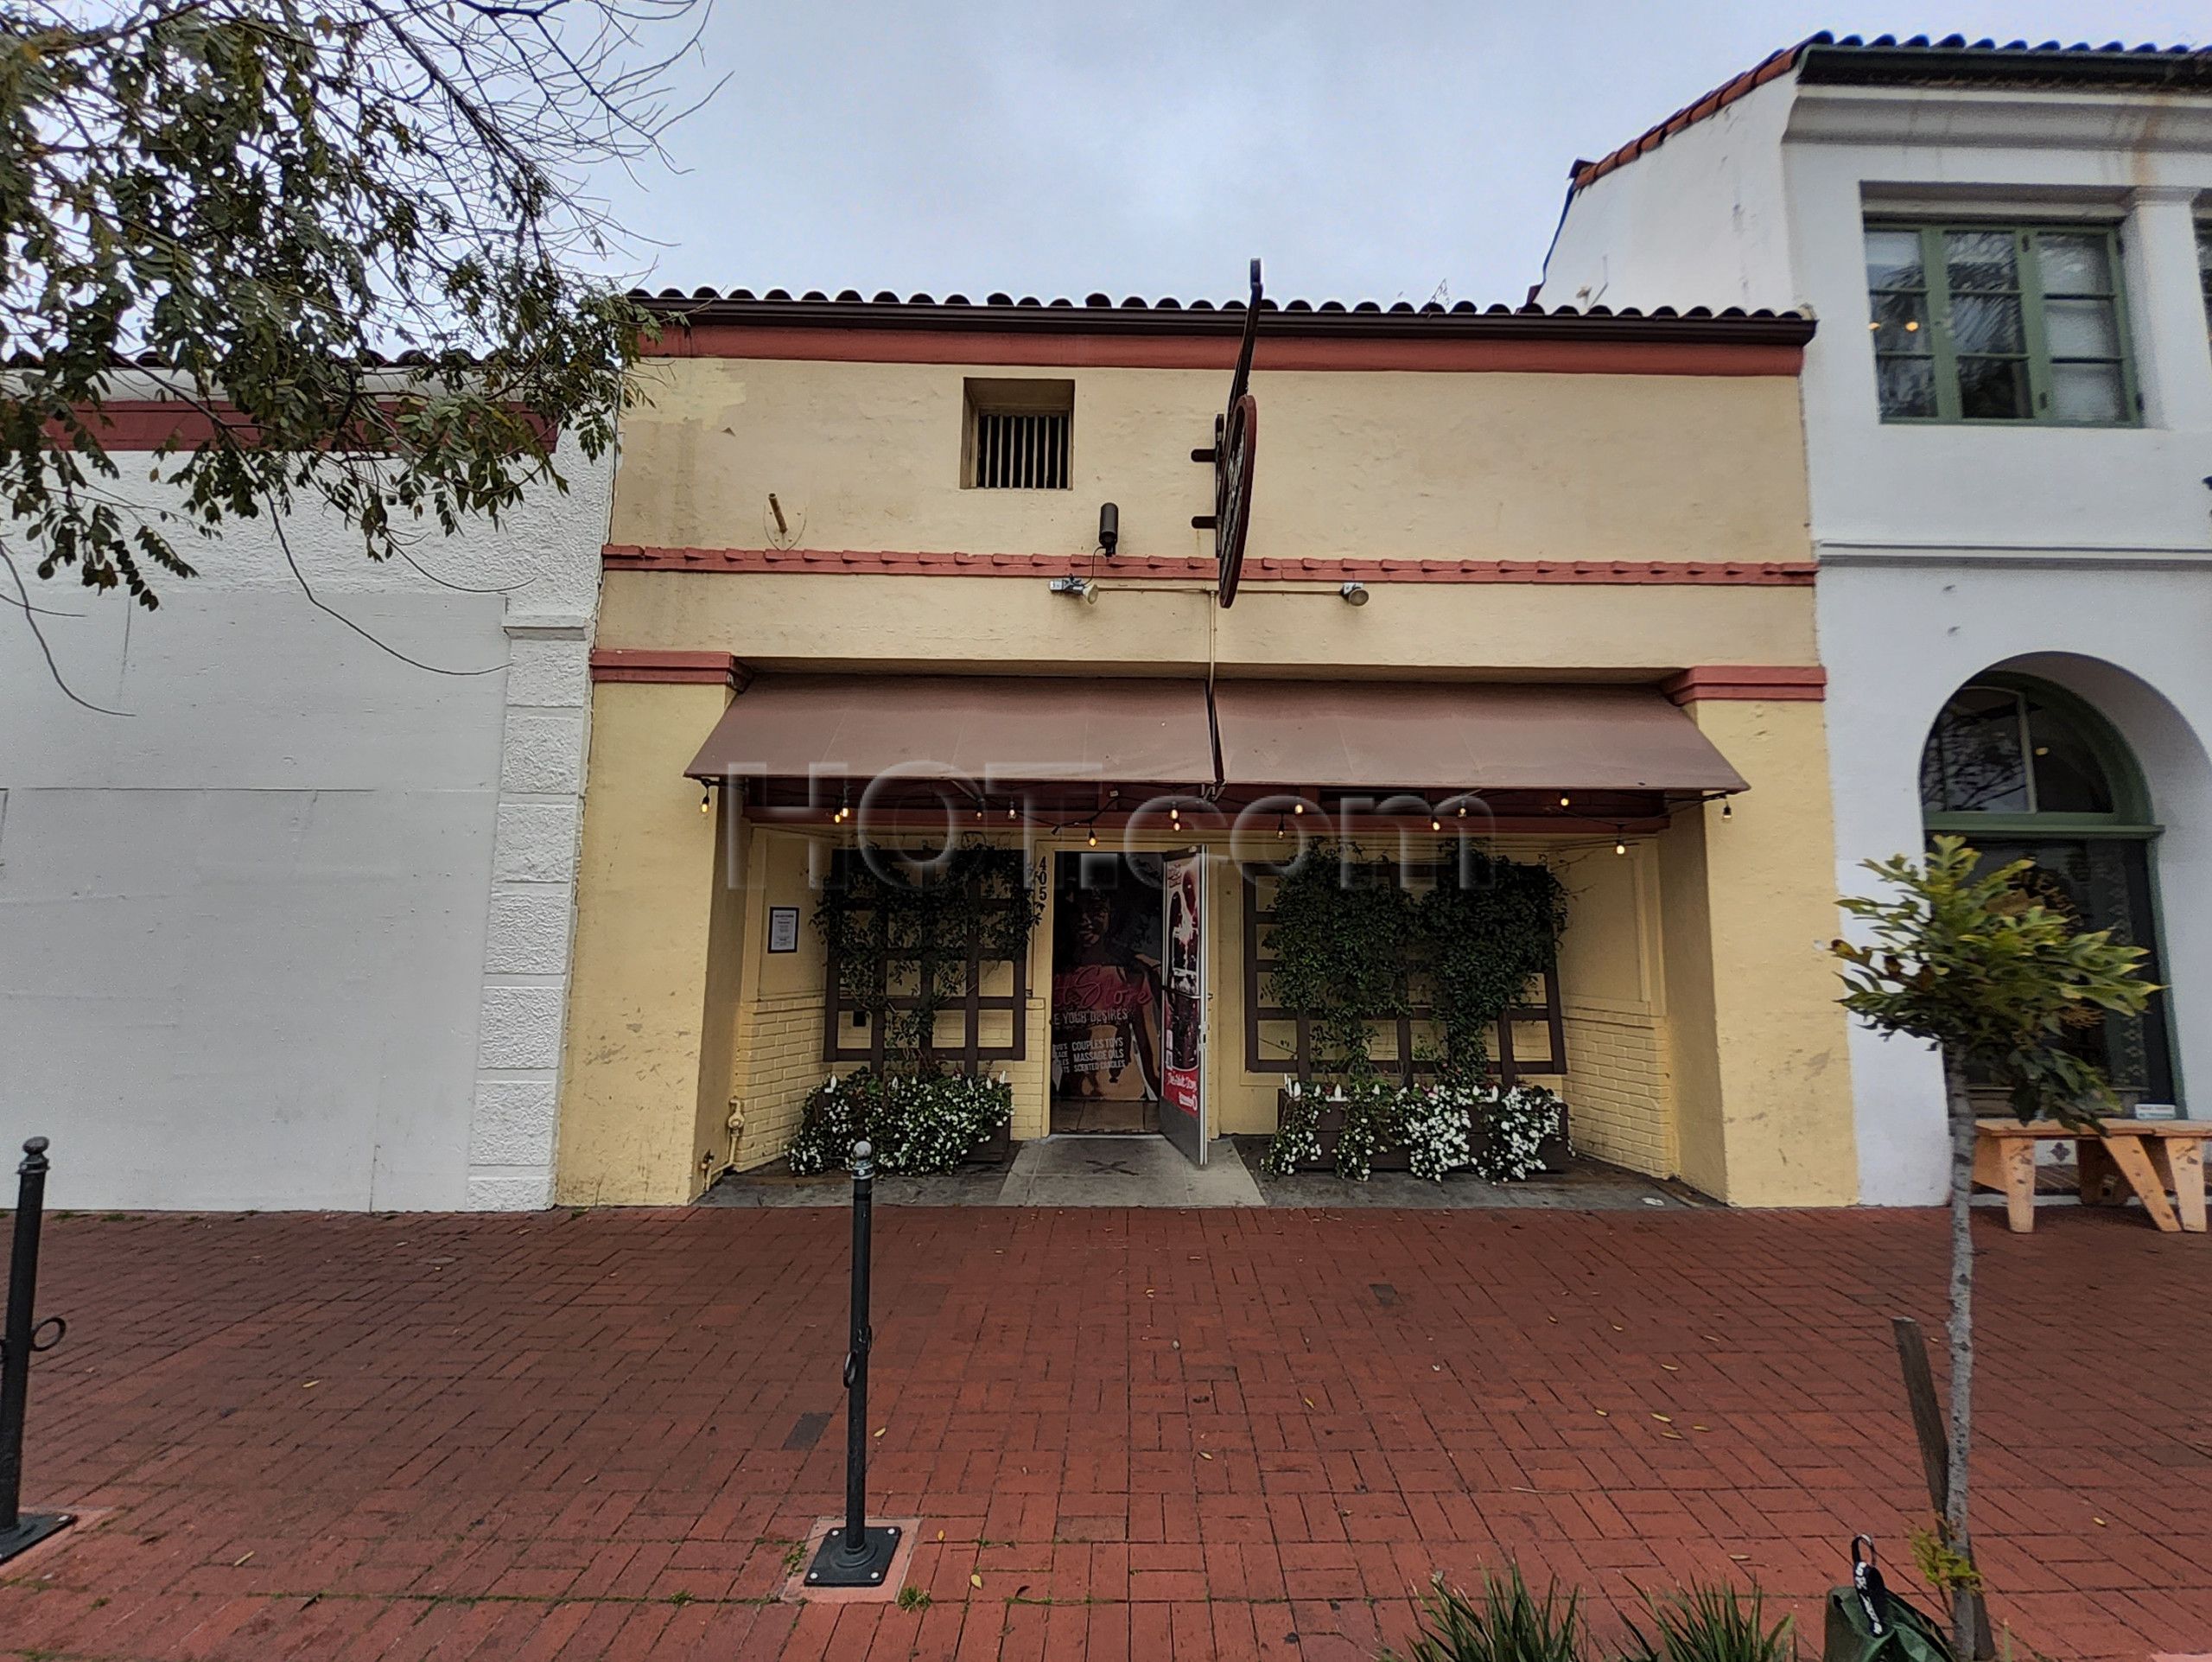 Santa Barbara, California The Adult Store